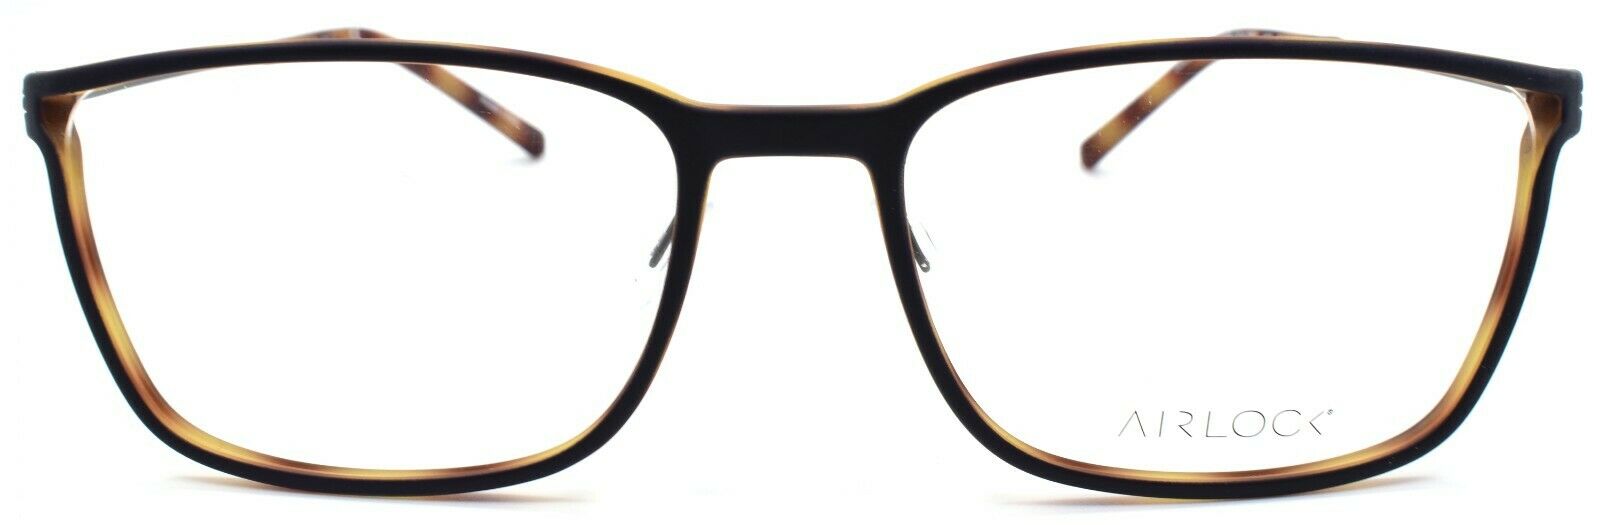 2-Marchon Airlock 2001 412 Men's Eyeglasses Frames 54-17-145 Matte Navy / Tortoise-886895394154-IKSpecs